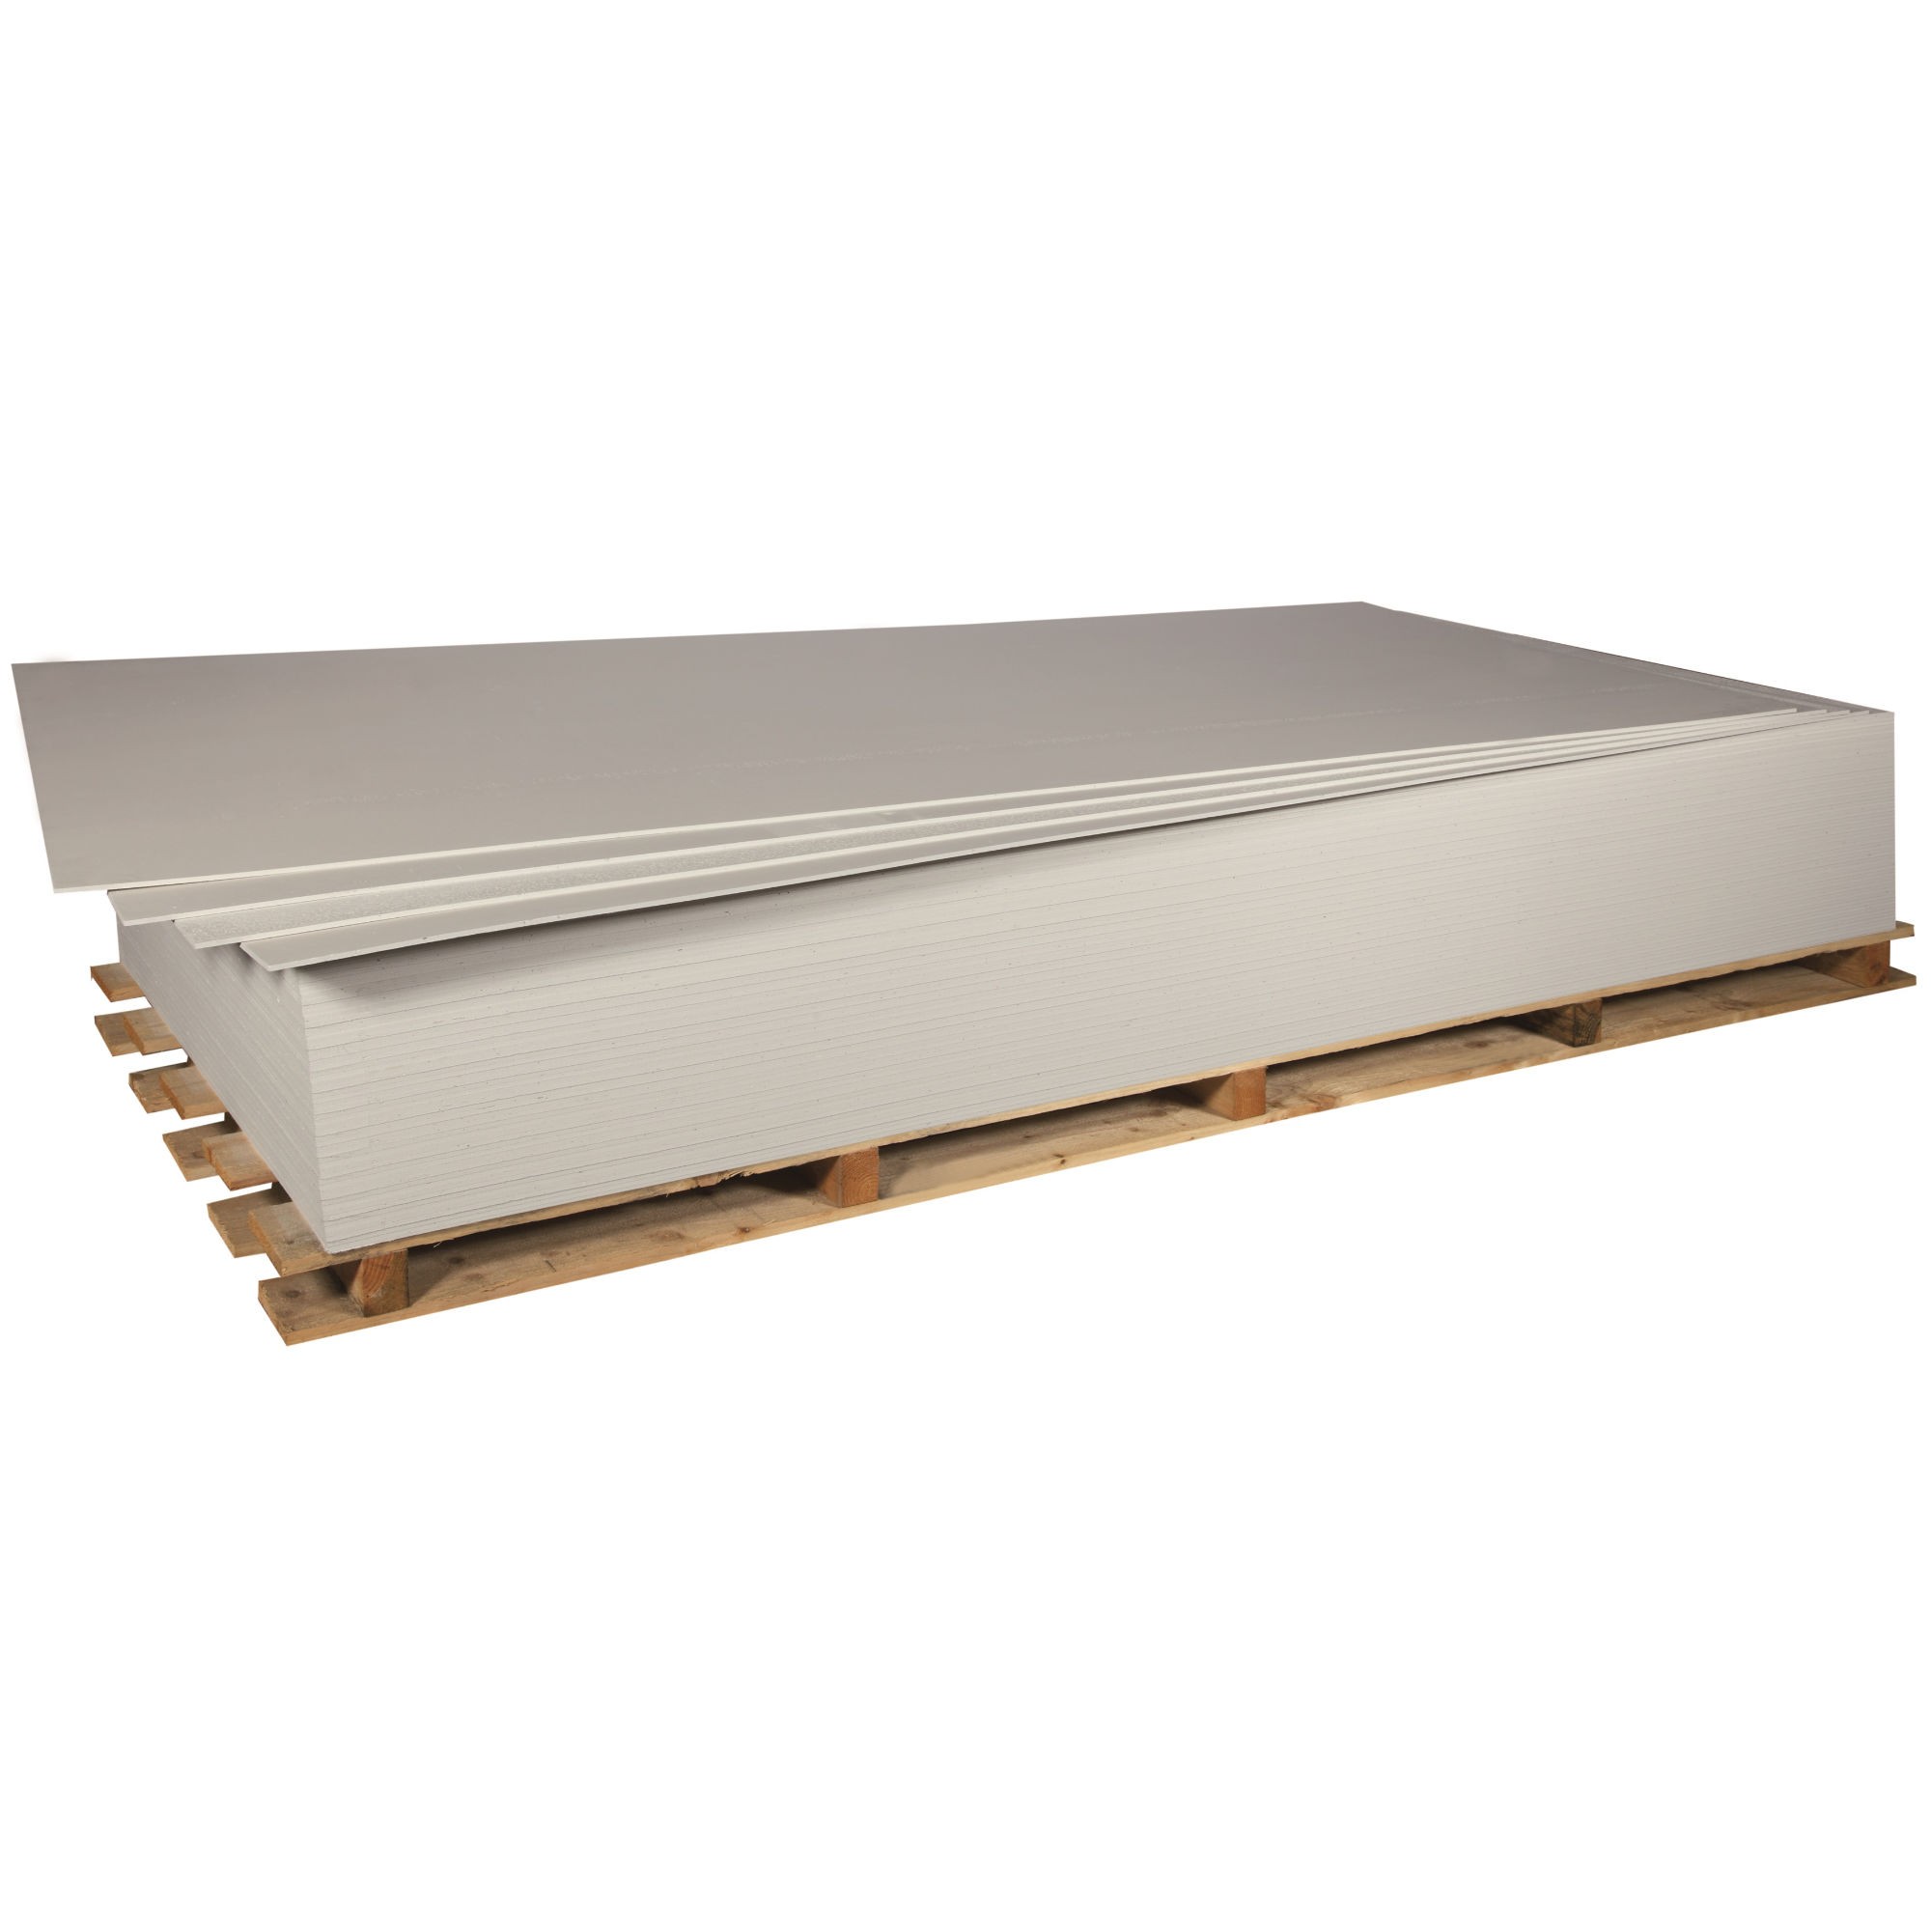 Special gypsum boards - Rigips Glasroc F Riflex 6 x 1200 x 2400 mm, https:maxbau.ro